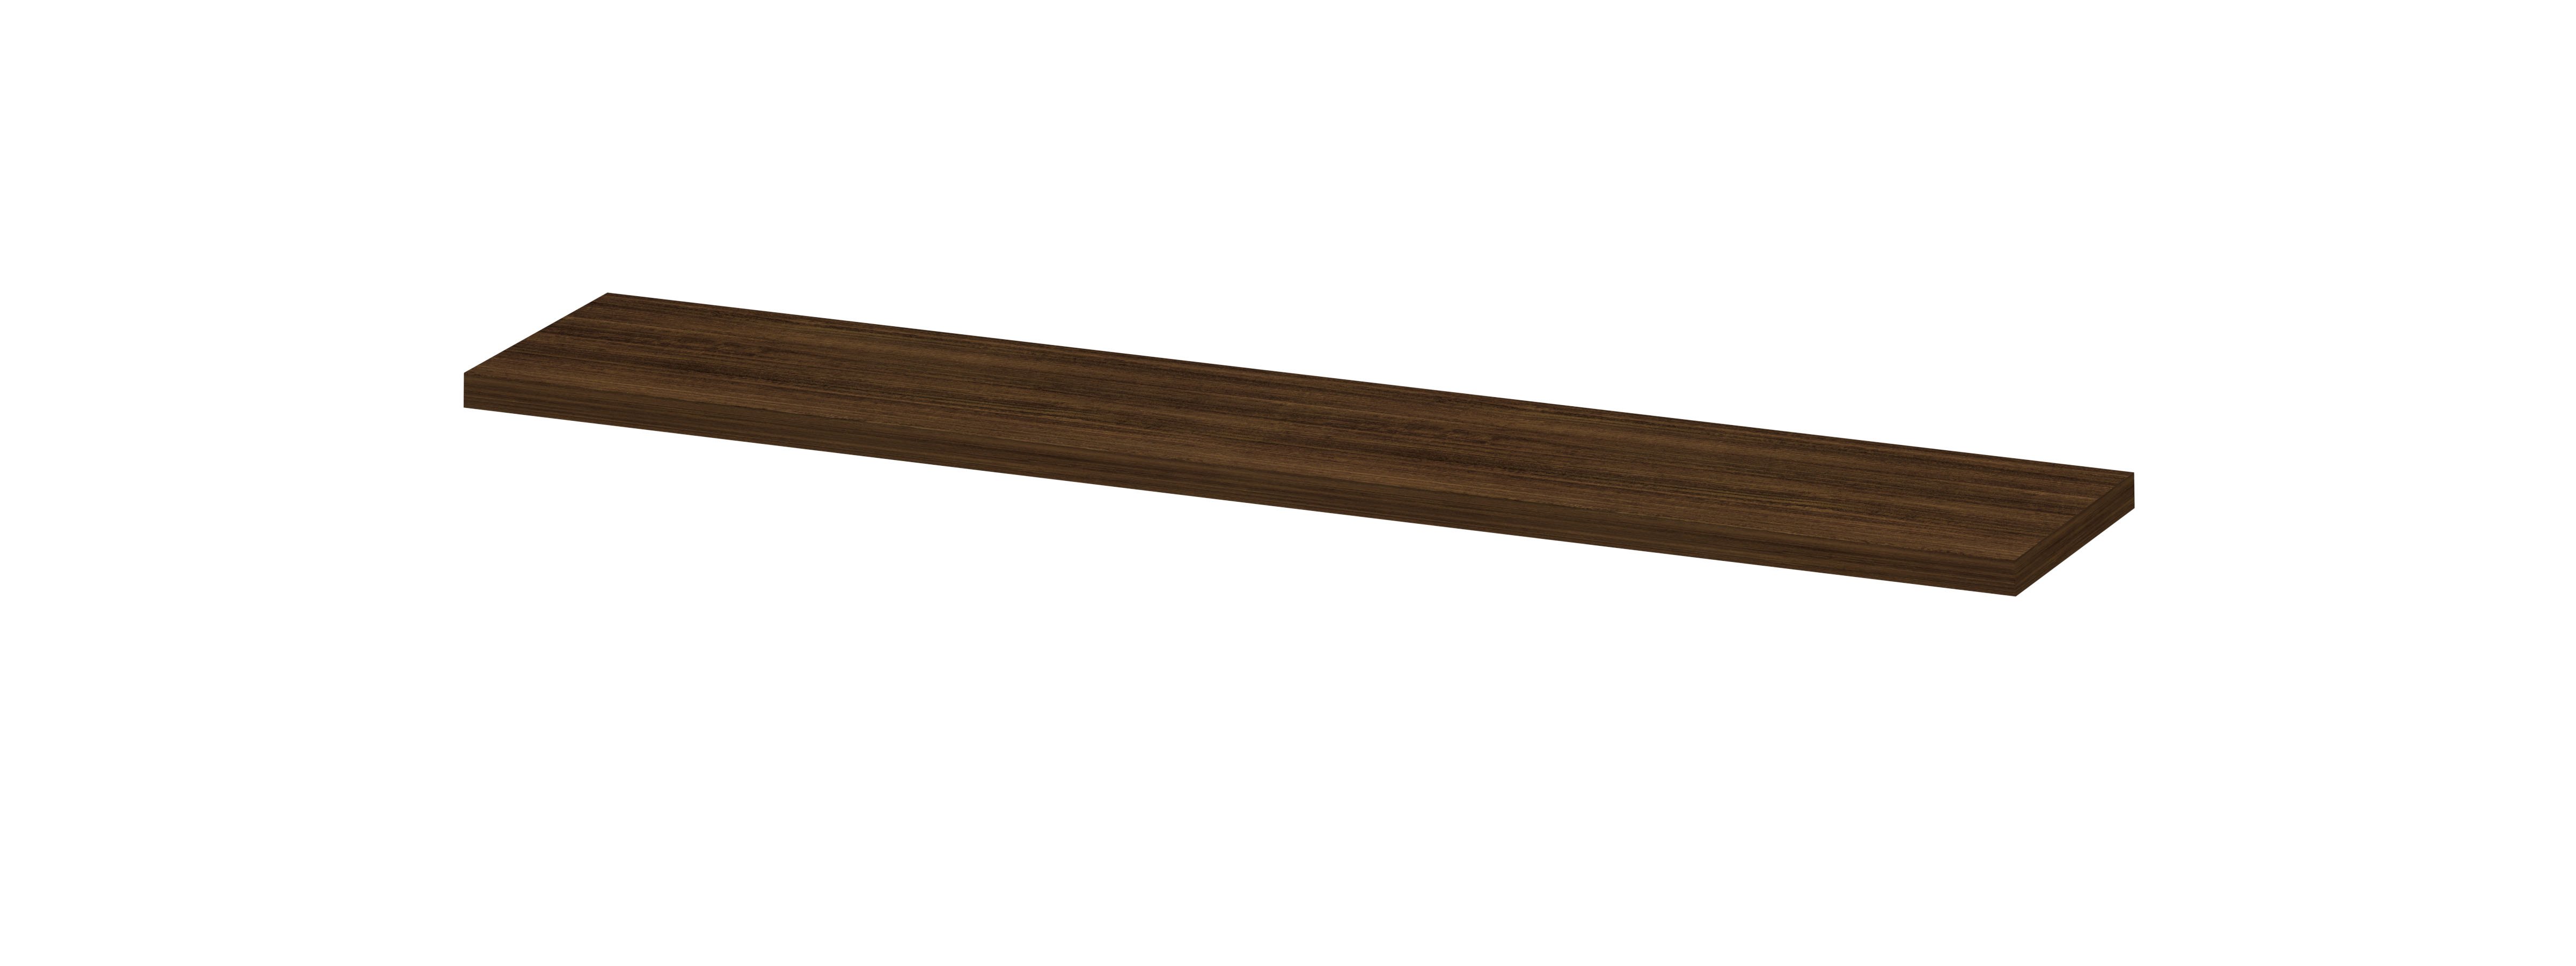 INK® wandplank in houtdecor 3,5cm dik variabele maat voor hoek opstelling inclusief blinde bevestiging 120-180x35x3,5cm, koper eiken